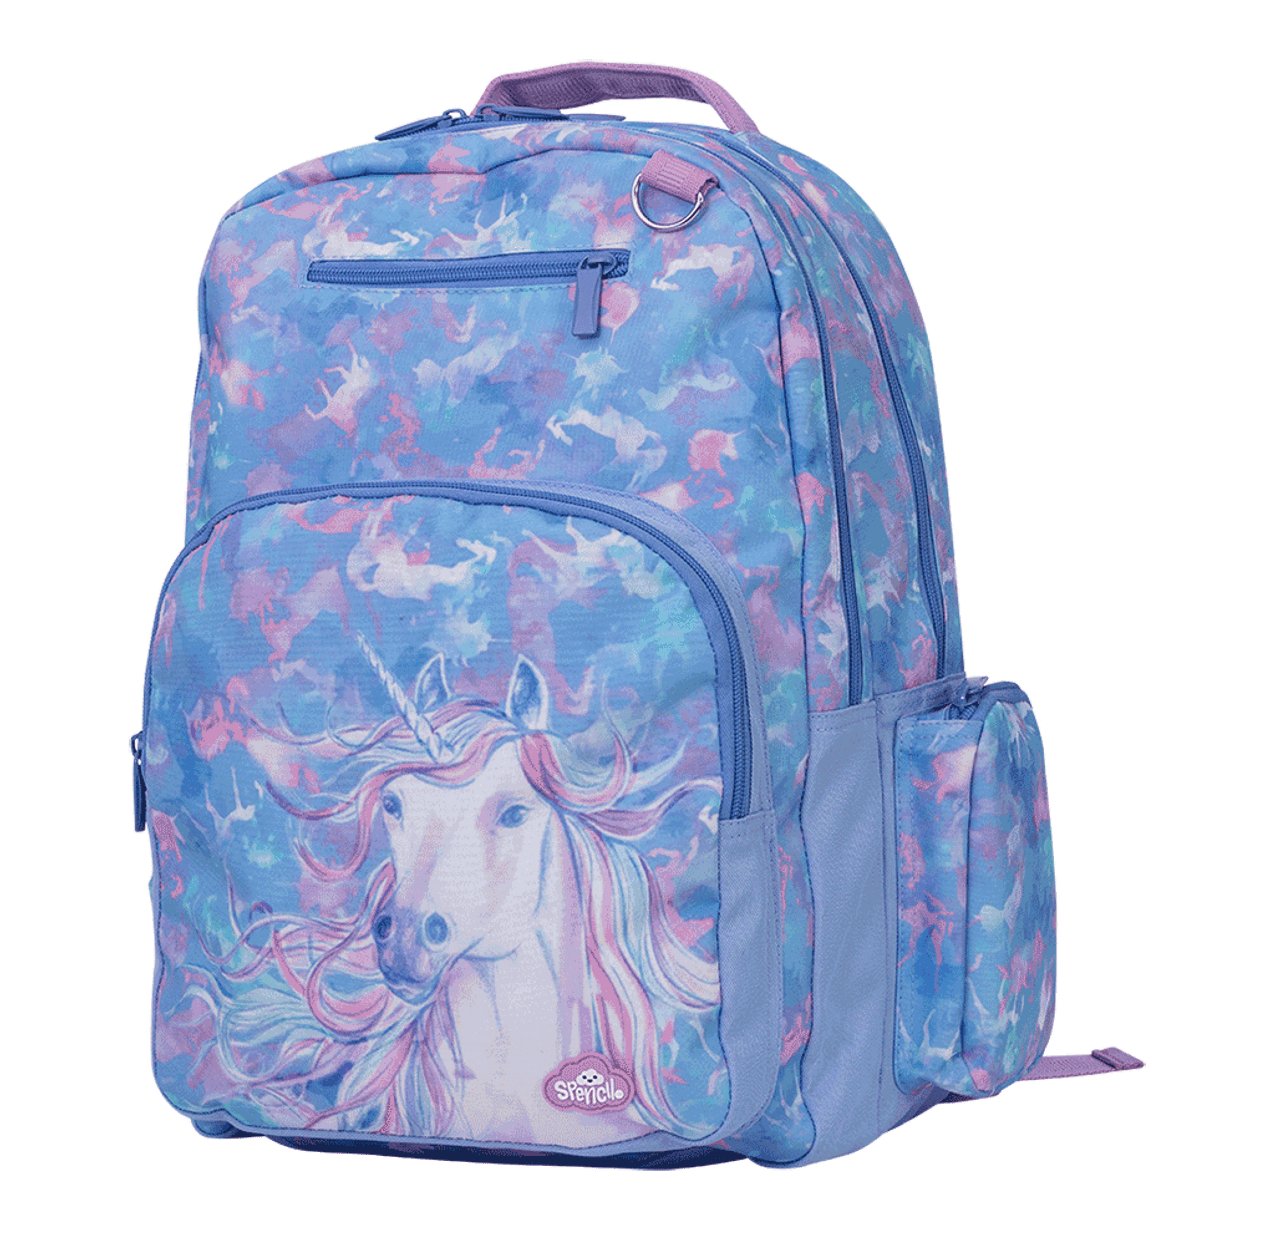 Big Kids Backpack - Unicorn Magic